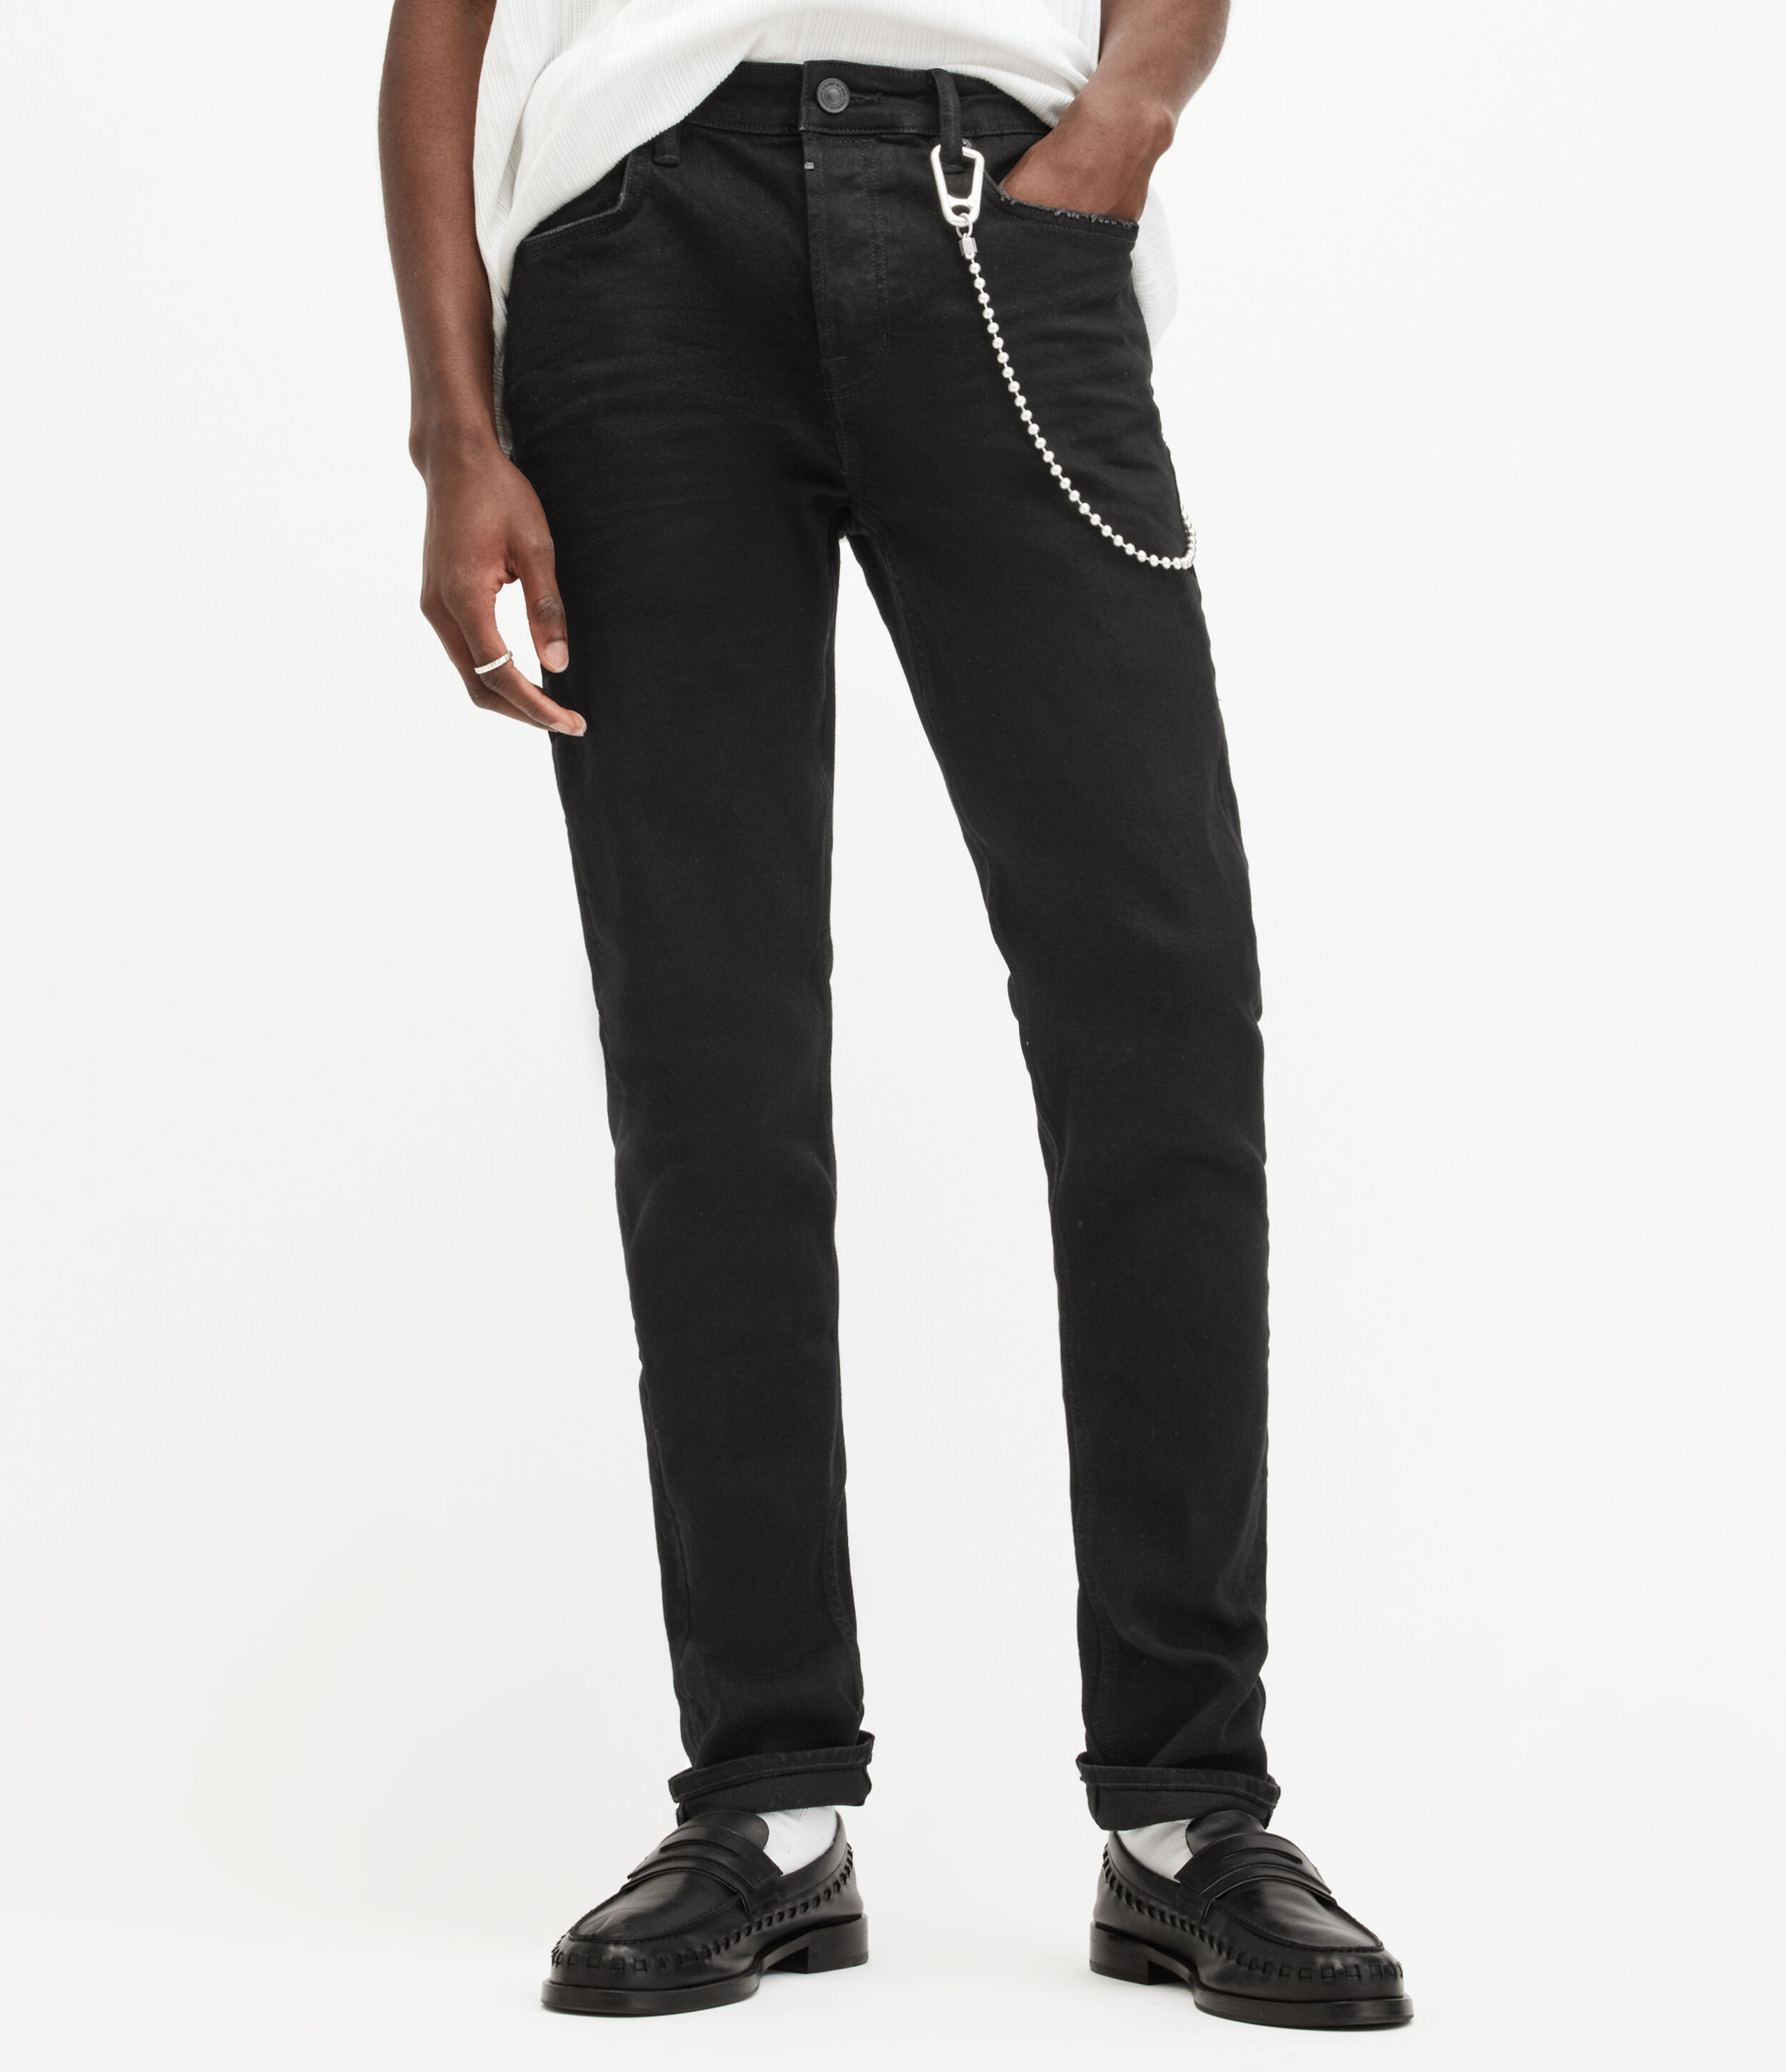 AllSaints Men’s Cigarette Skinny Jeans, Jet Black, Size: 36/L30